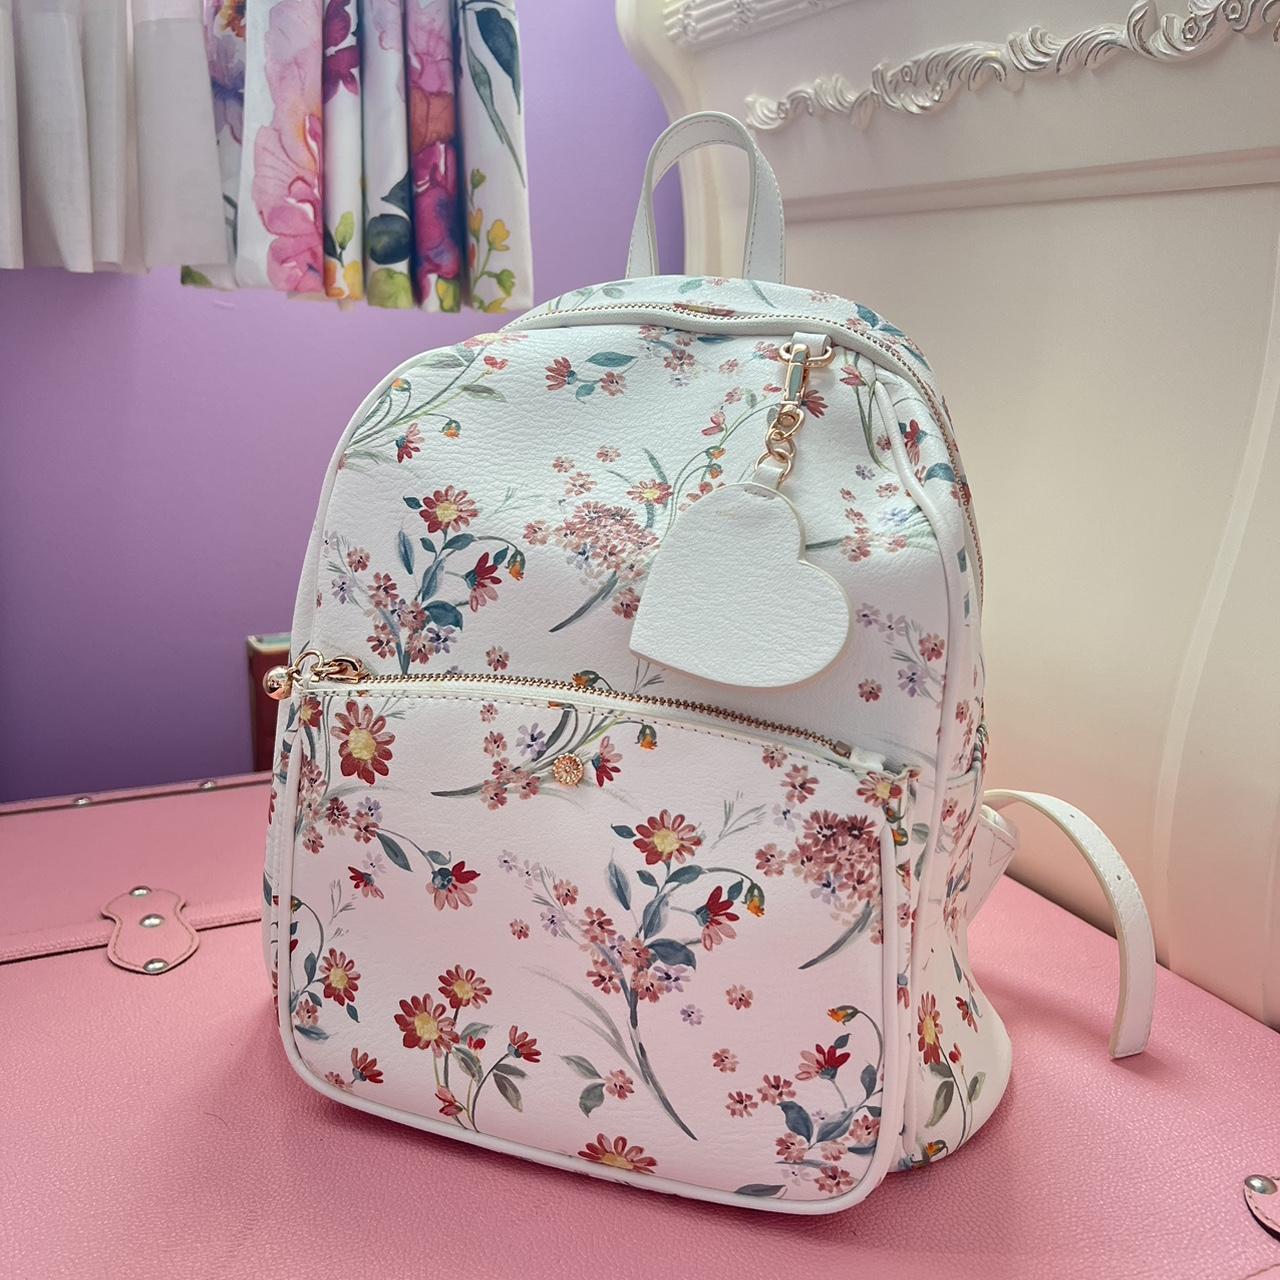 floral lauren conrad mini backpack w/ heart charm - Depop